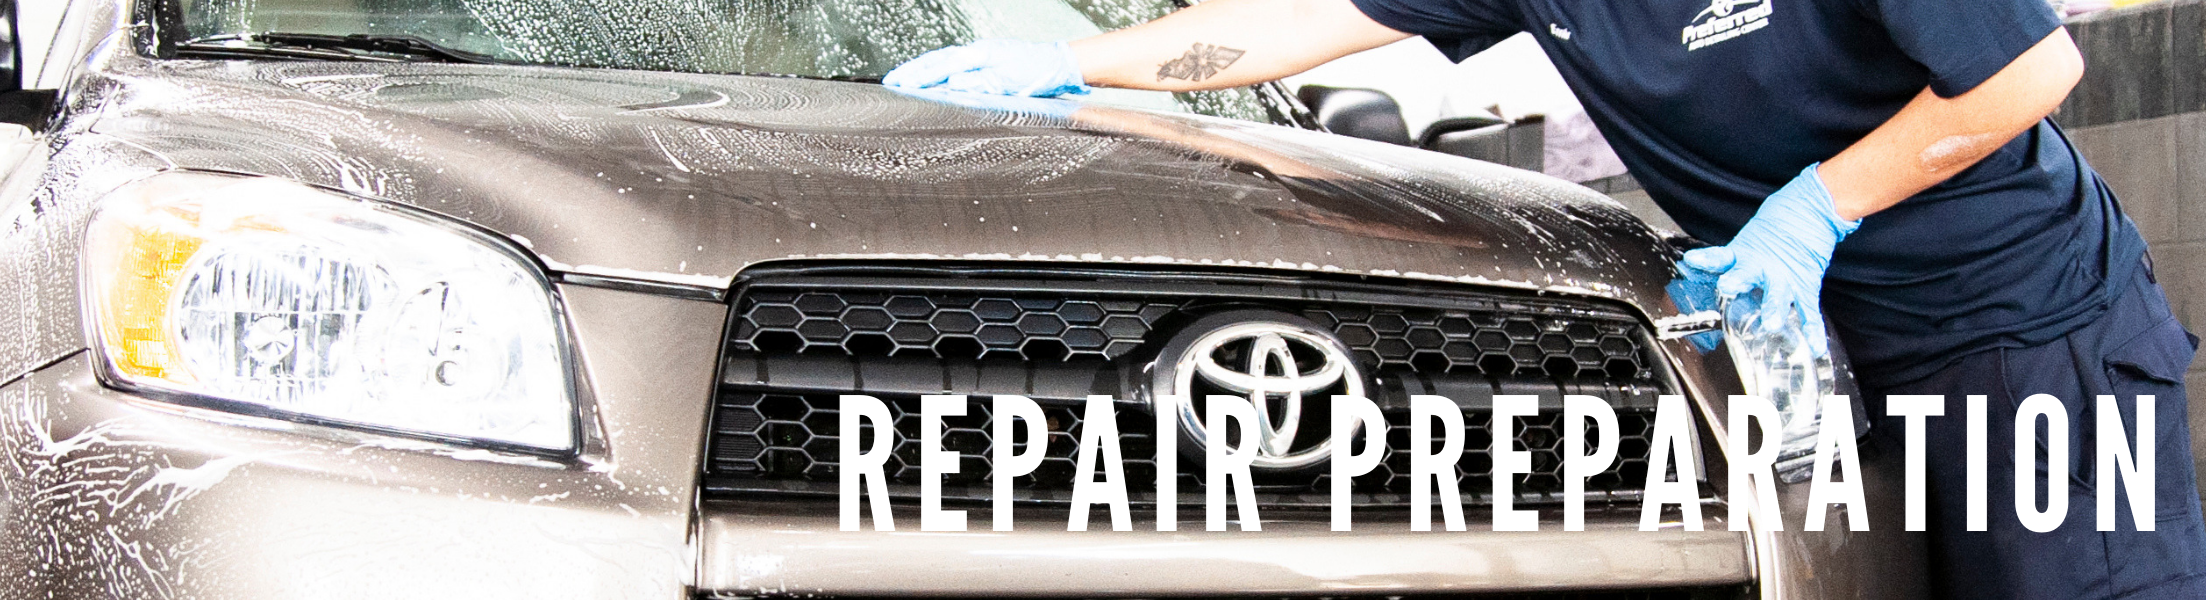 Repair Preparation | Toyota of Grand Rapids in Grand Rapids MI